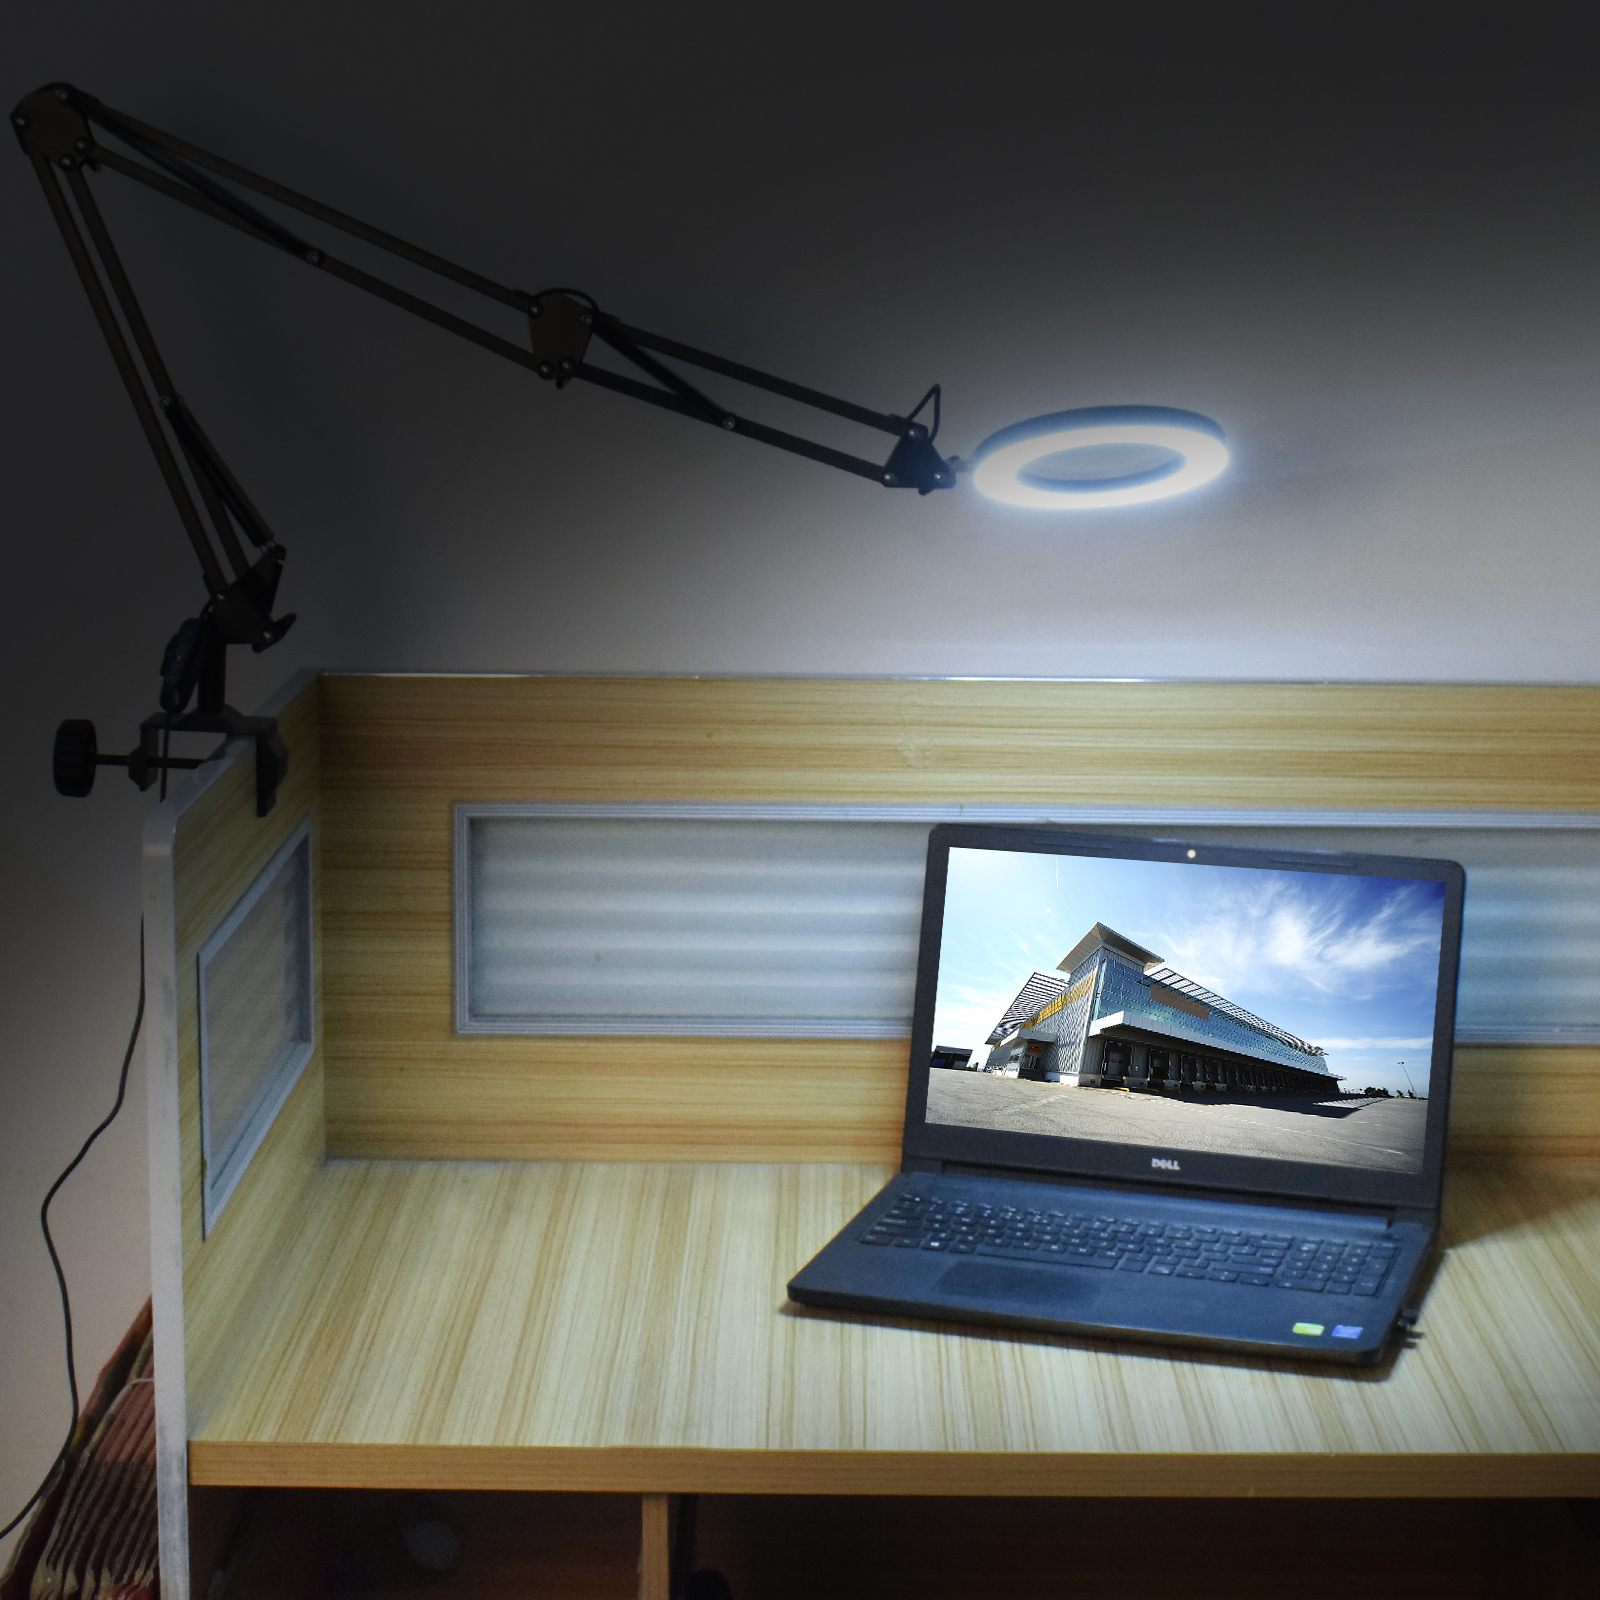 NEWACALOX-Flexible-Desk-Large-5X-USB-LED-Magnifying-Glass-3-Colors-Illuminated-Magnifier-Lamp-Loupe--1901585-14